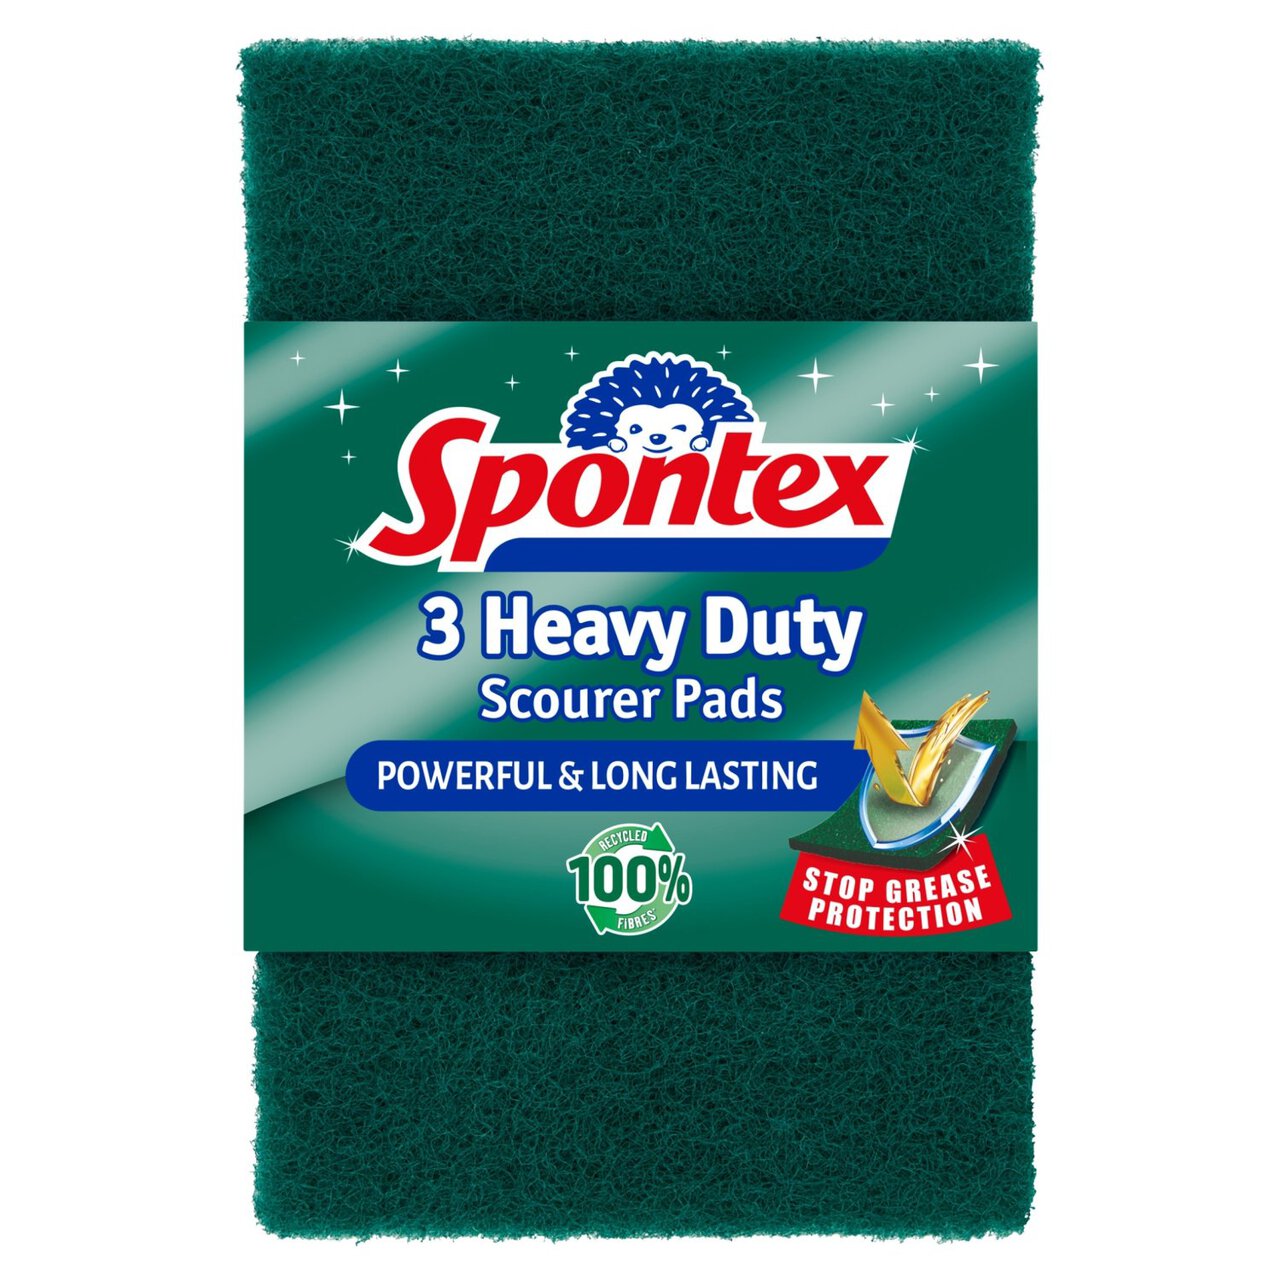 Spontex Heavy Duty Scourer Pads 3 per pack